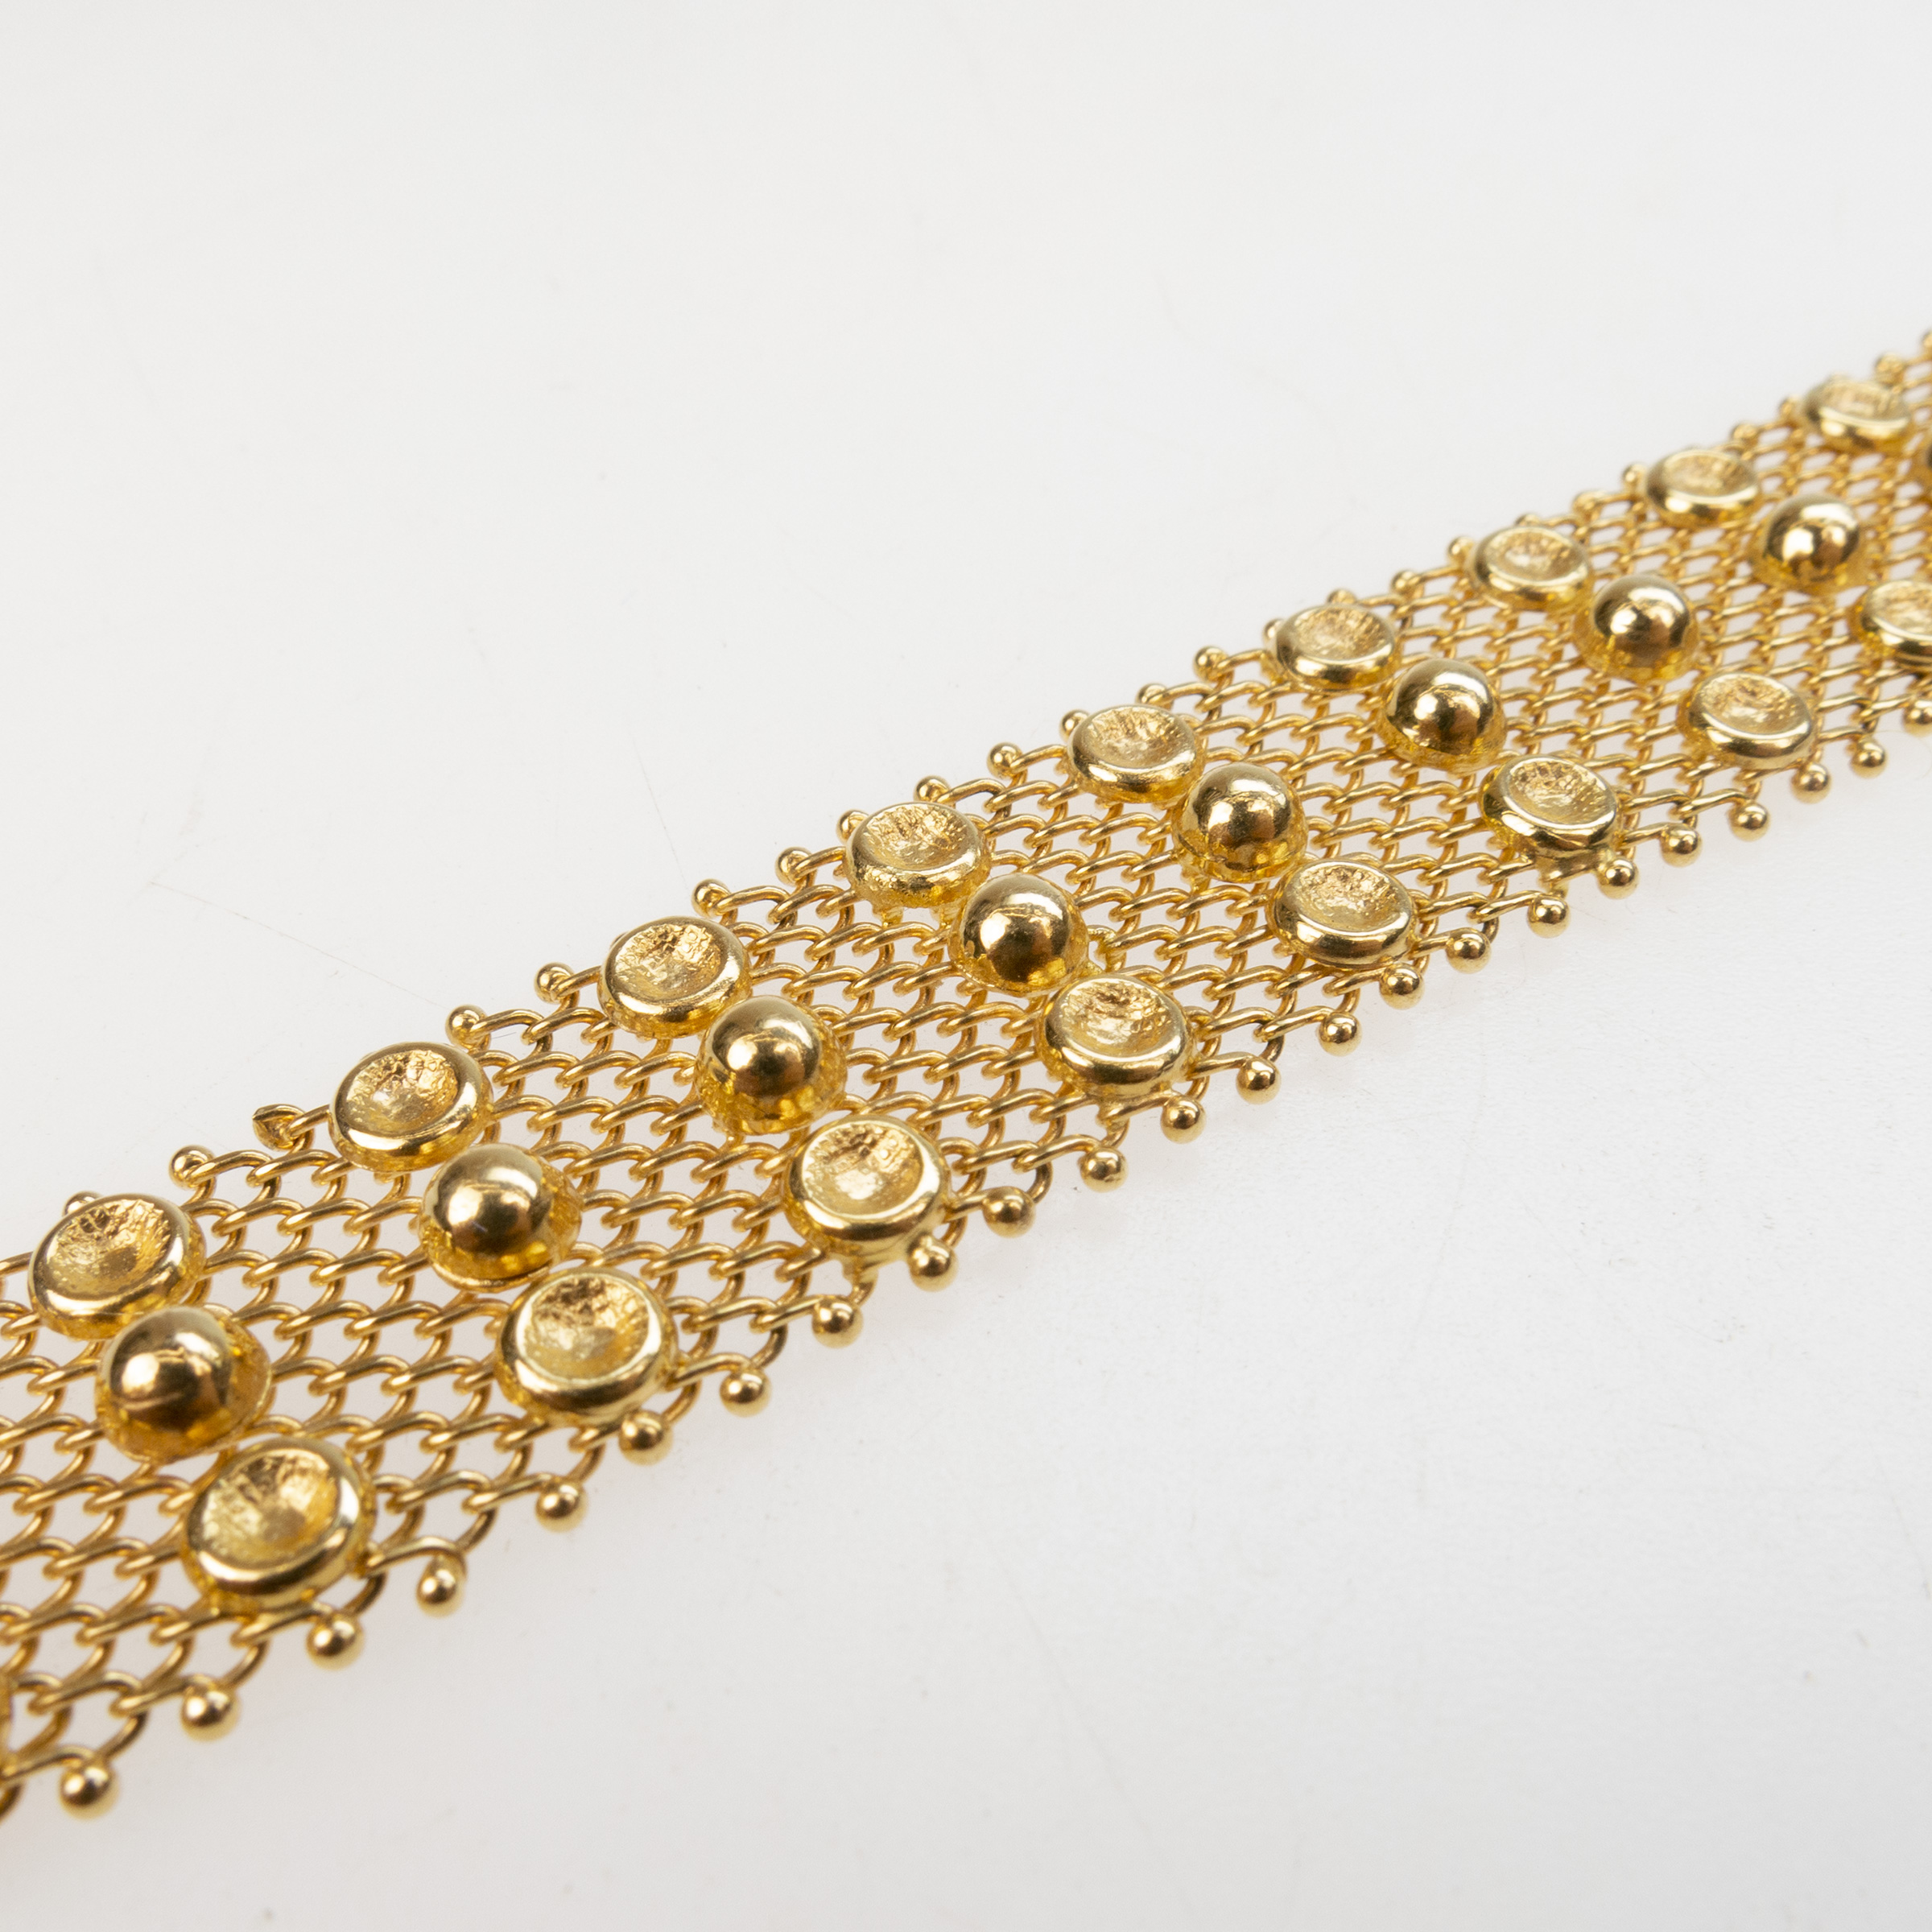 Italian 18k Yellow Gold Woven Mesh Strap Bracelet